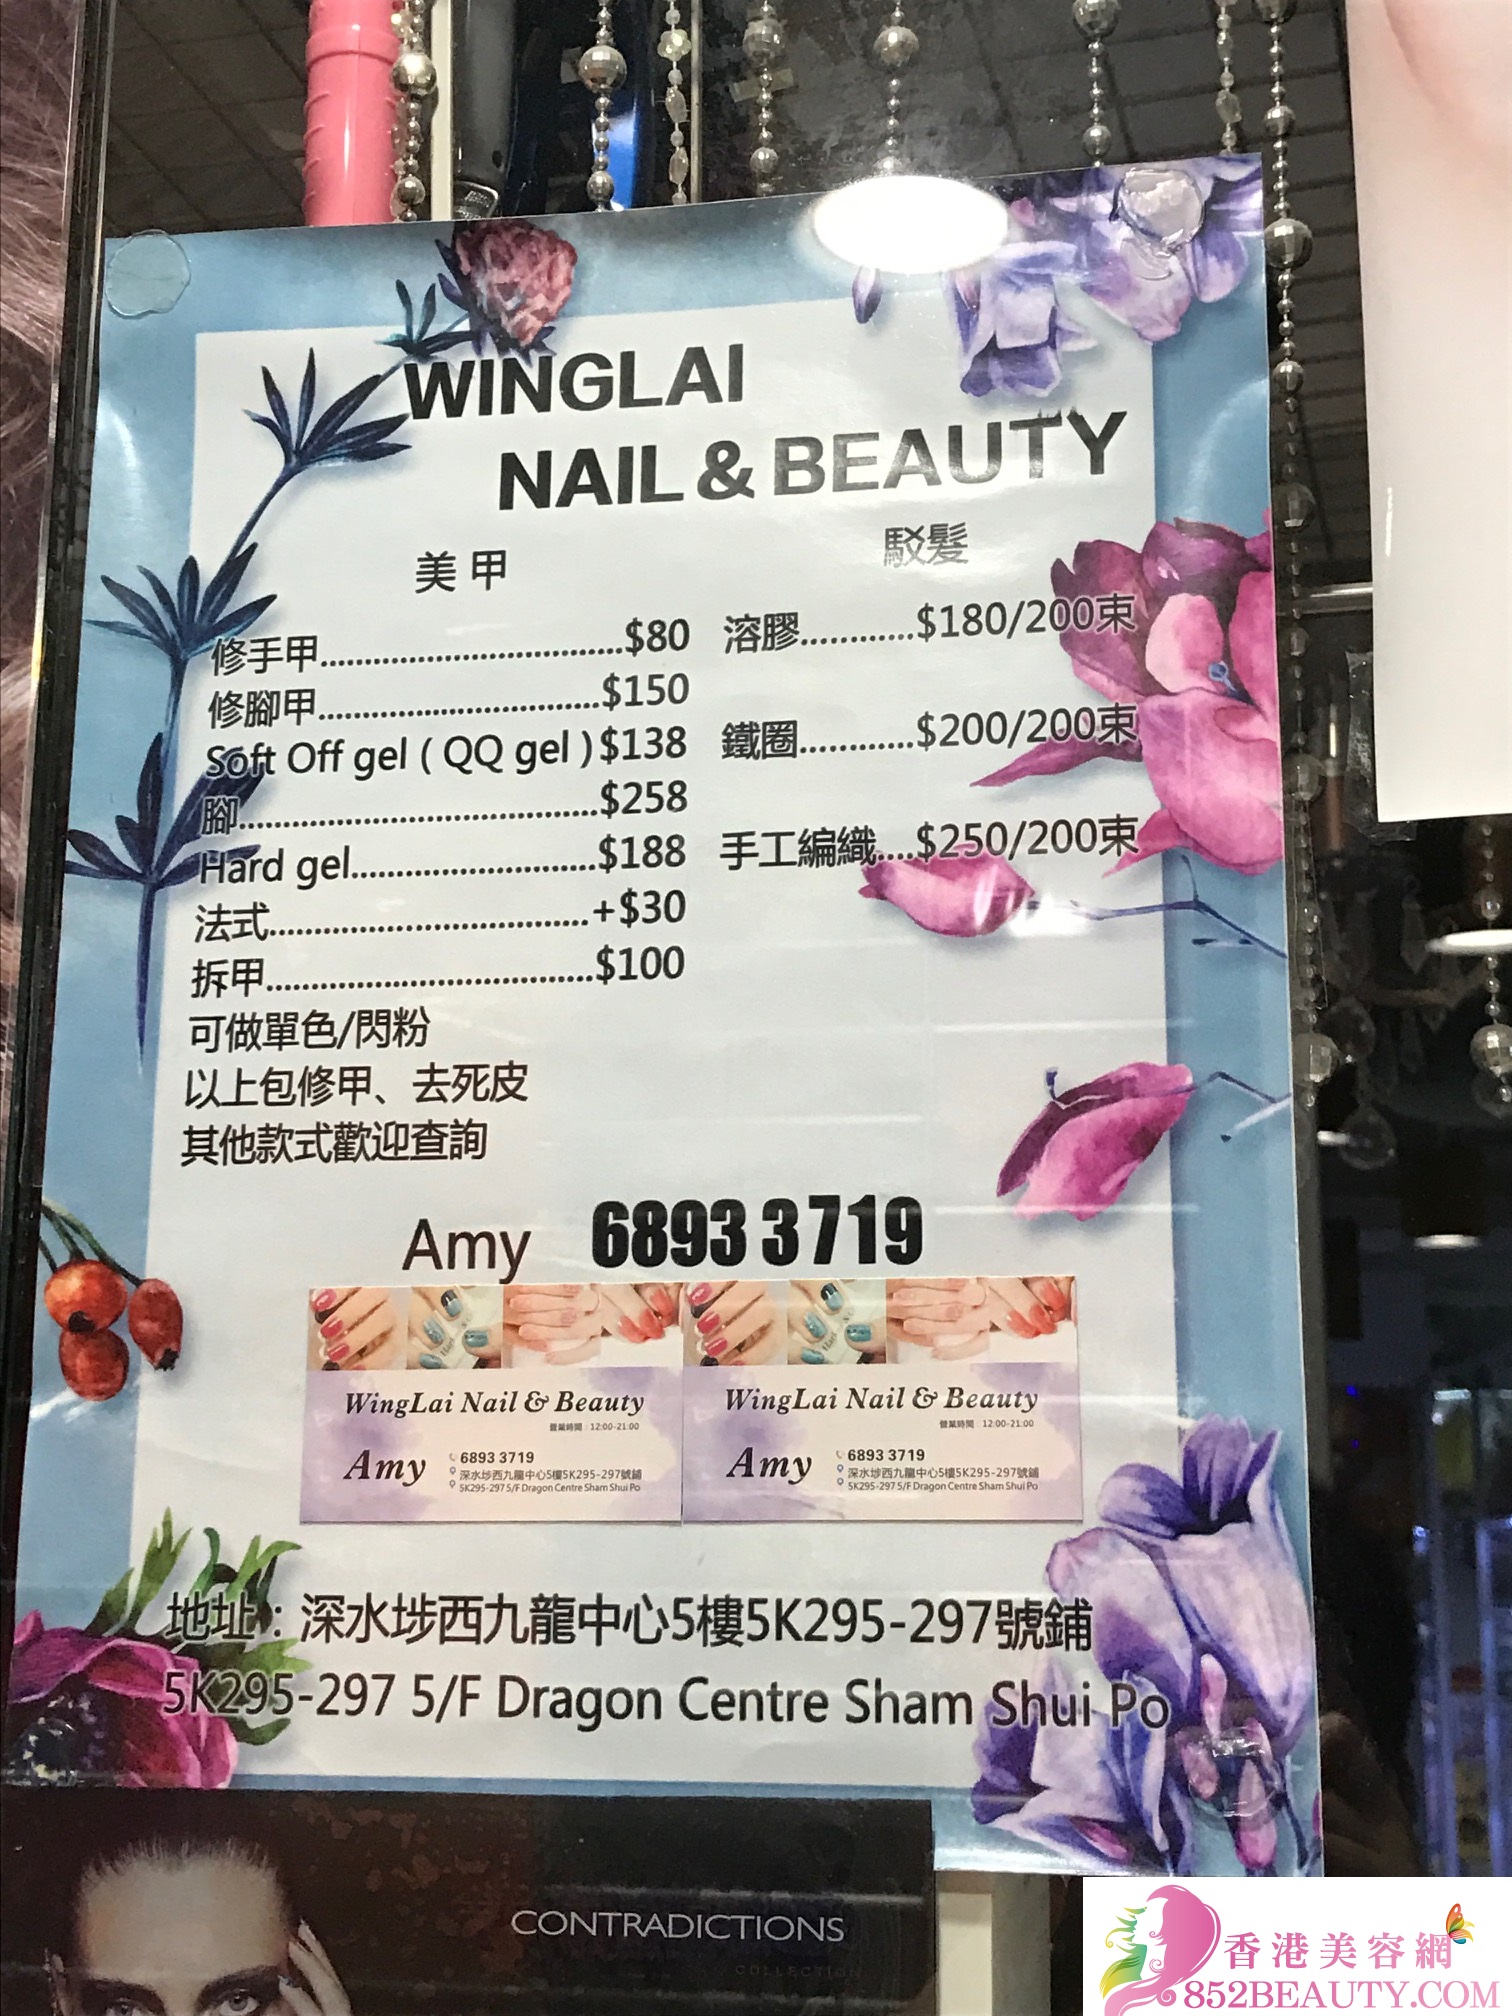 香港美容網 Hong Kong Beauty Salon 美容院 / 美容師: WingLai Nail&Beauty